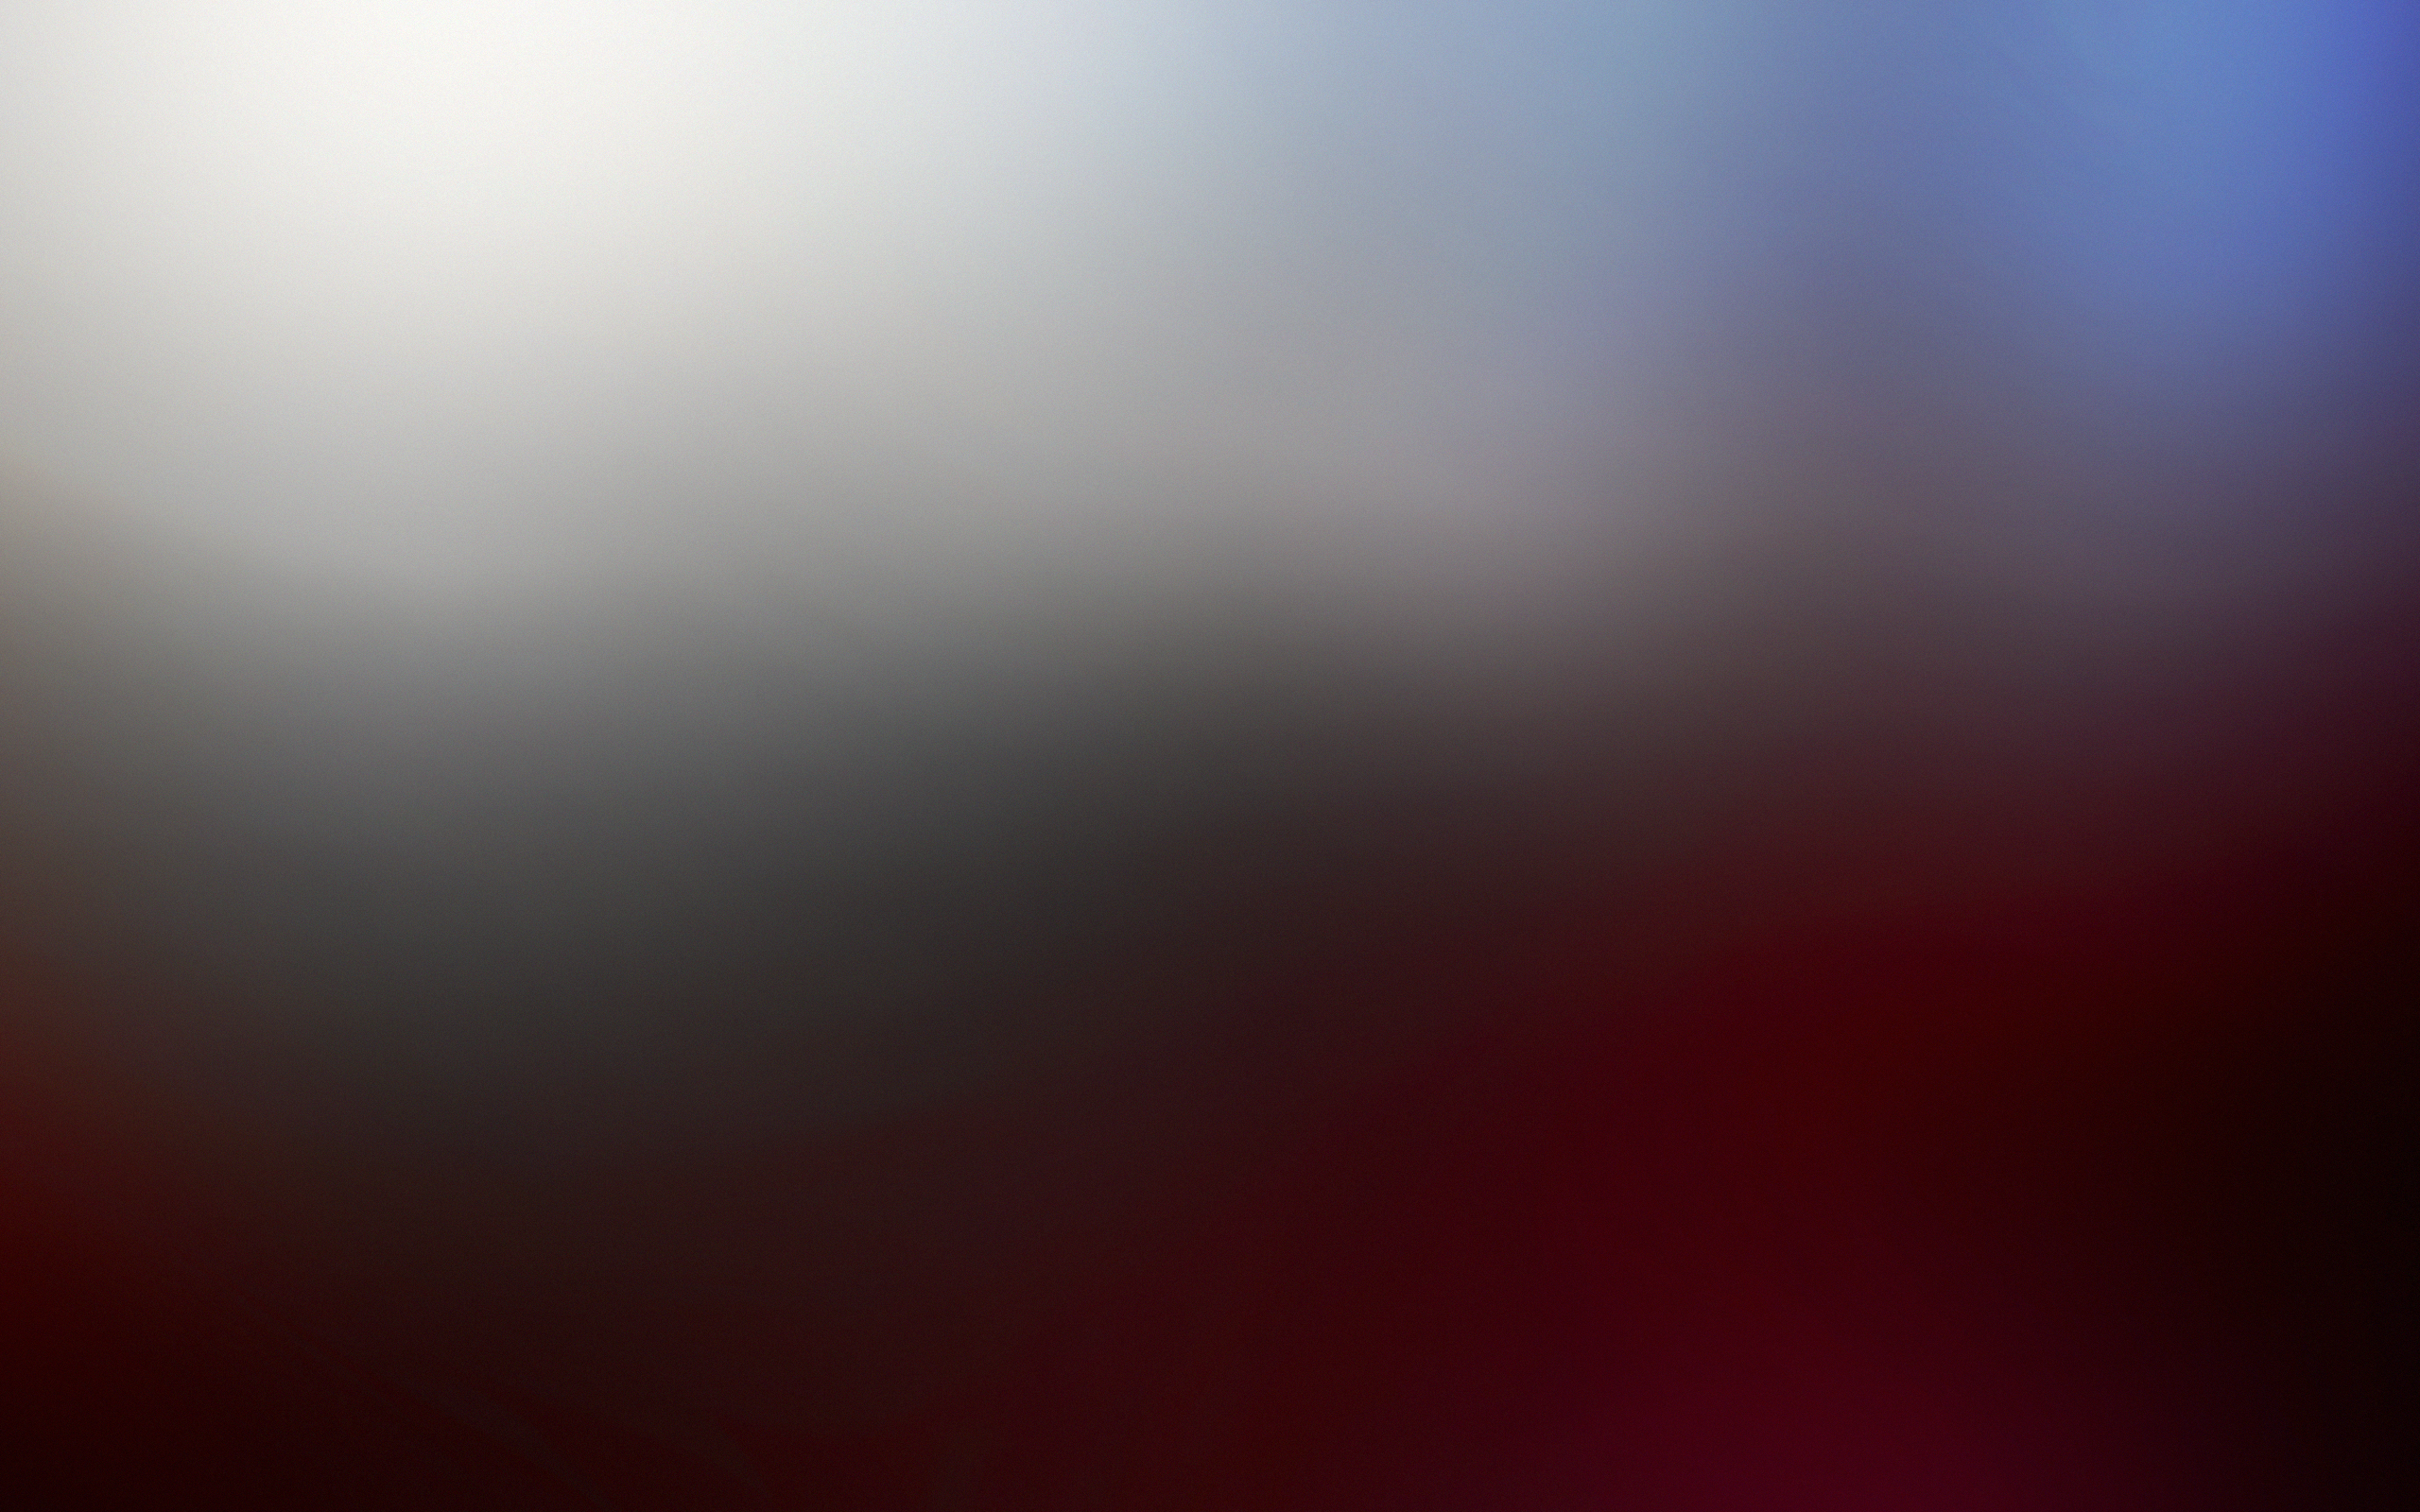 14 Blur HD Wallpapers | Backgrounds - Wallpaper Abyss